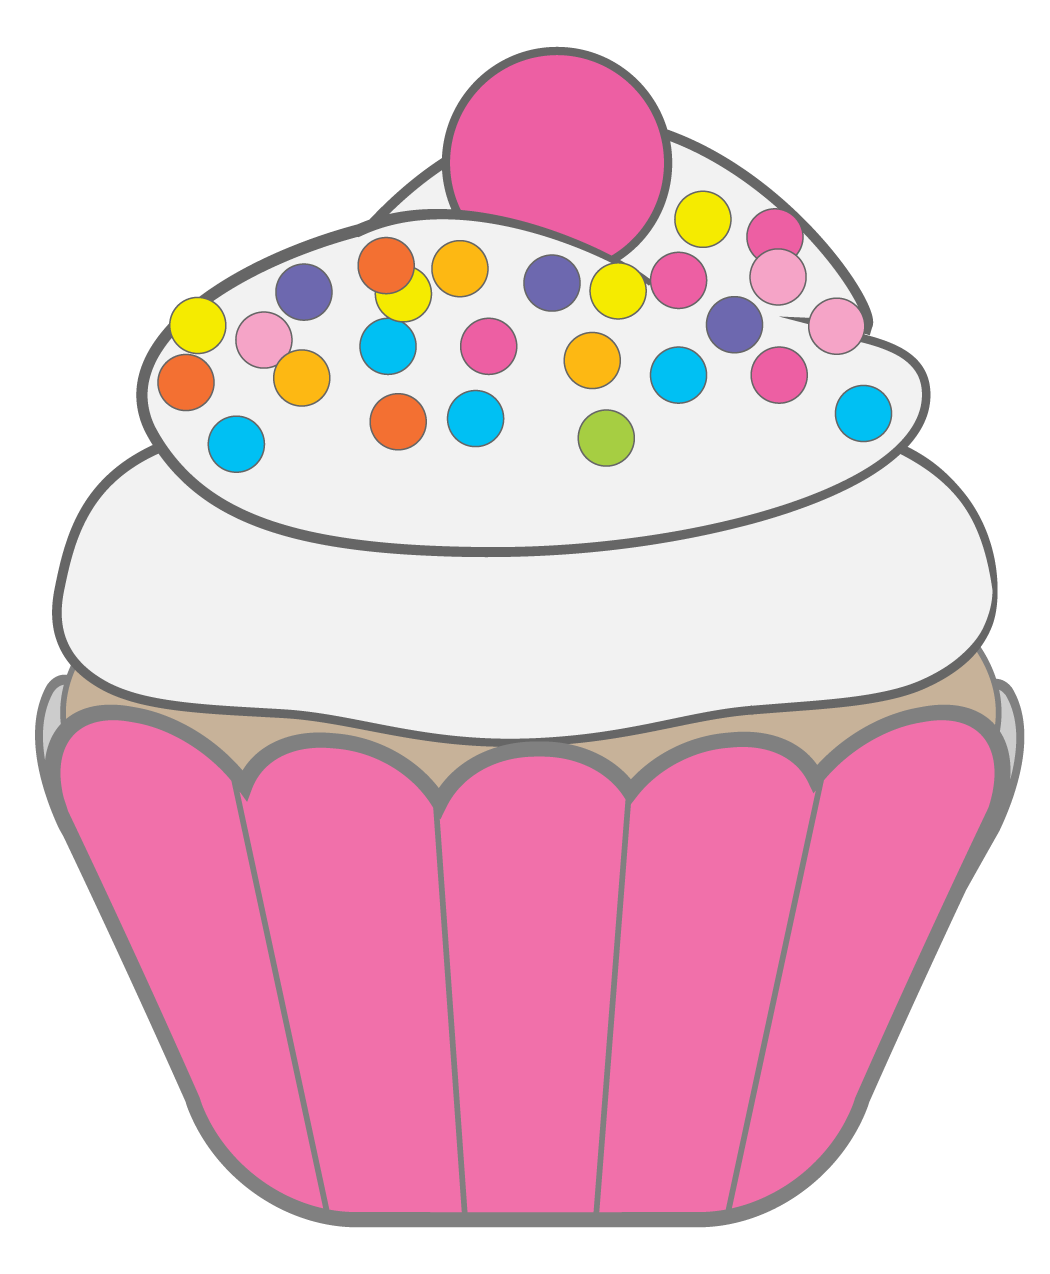 Birthday cake clip art free b - Cake Clipart Free